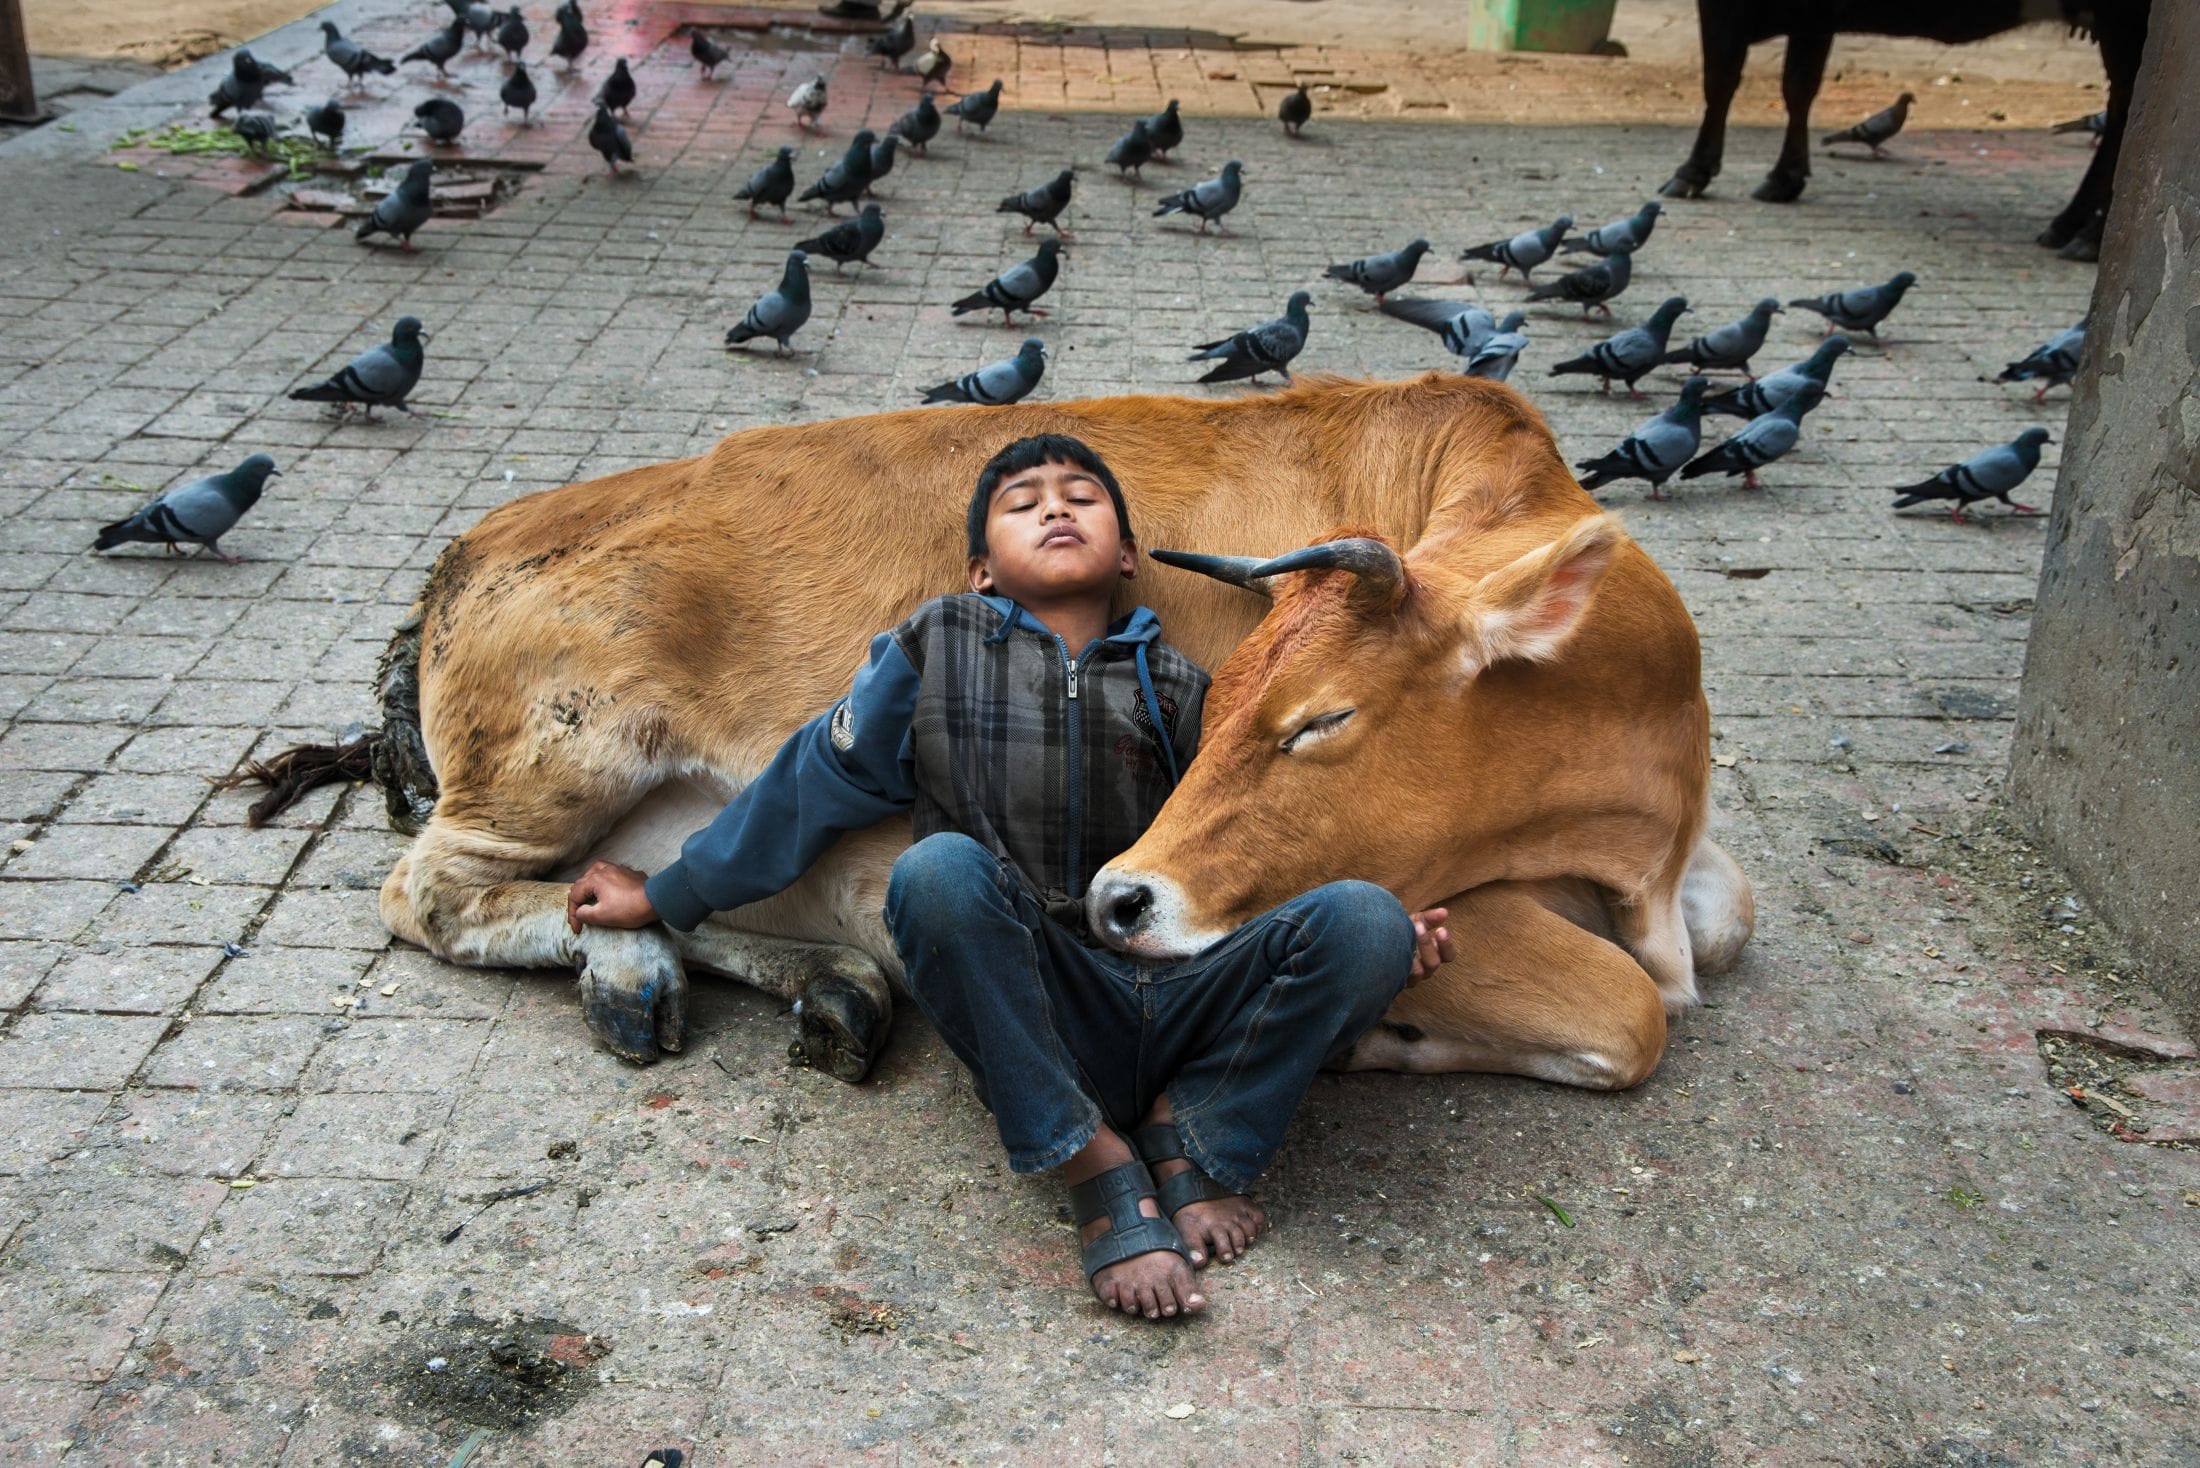 Steve McCurry, "Animals".